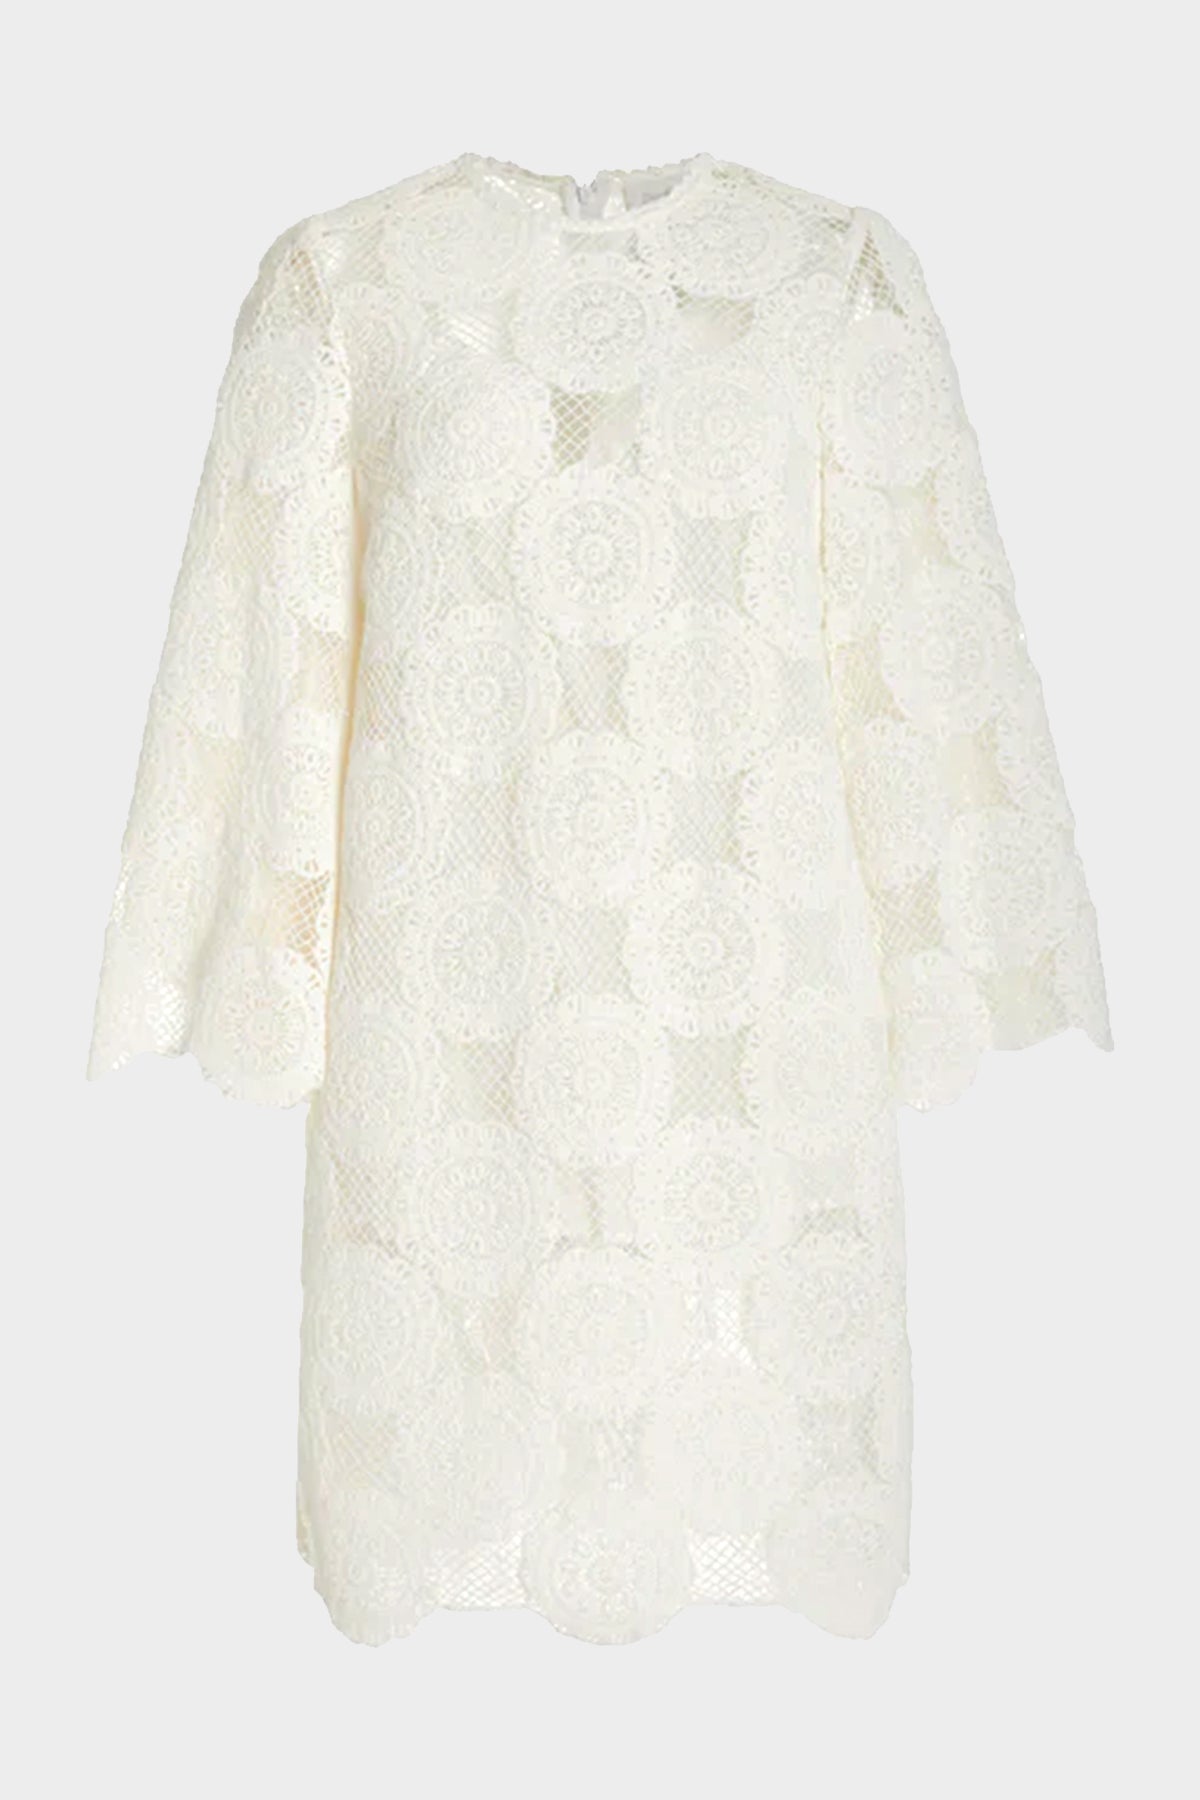 Junie Lace Tunic Dress in Ivory - shop-olivia.com